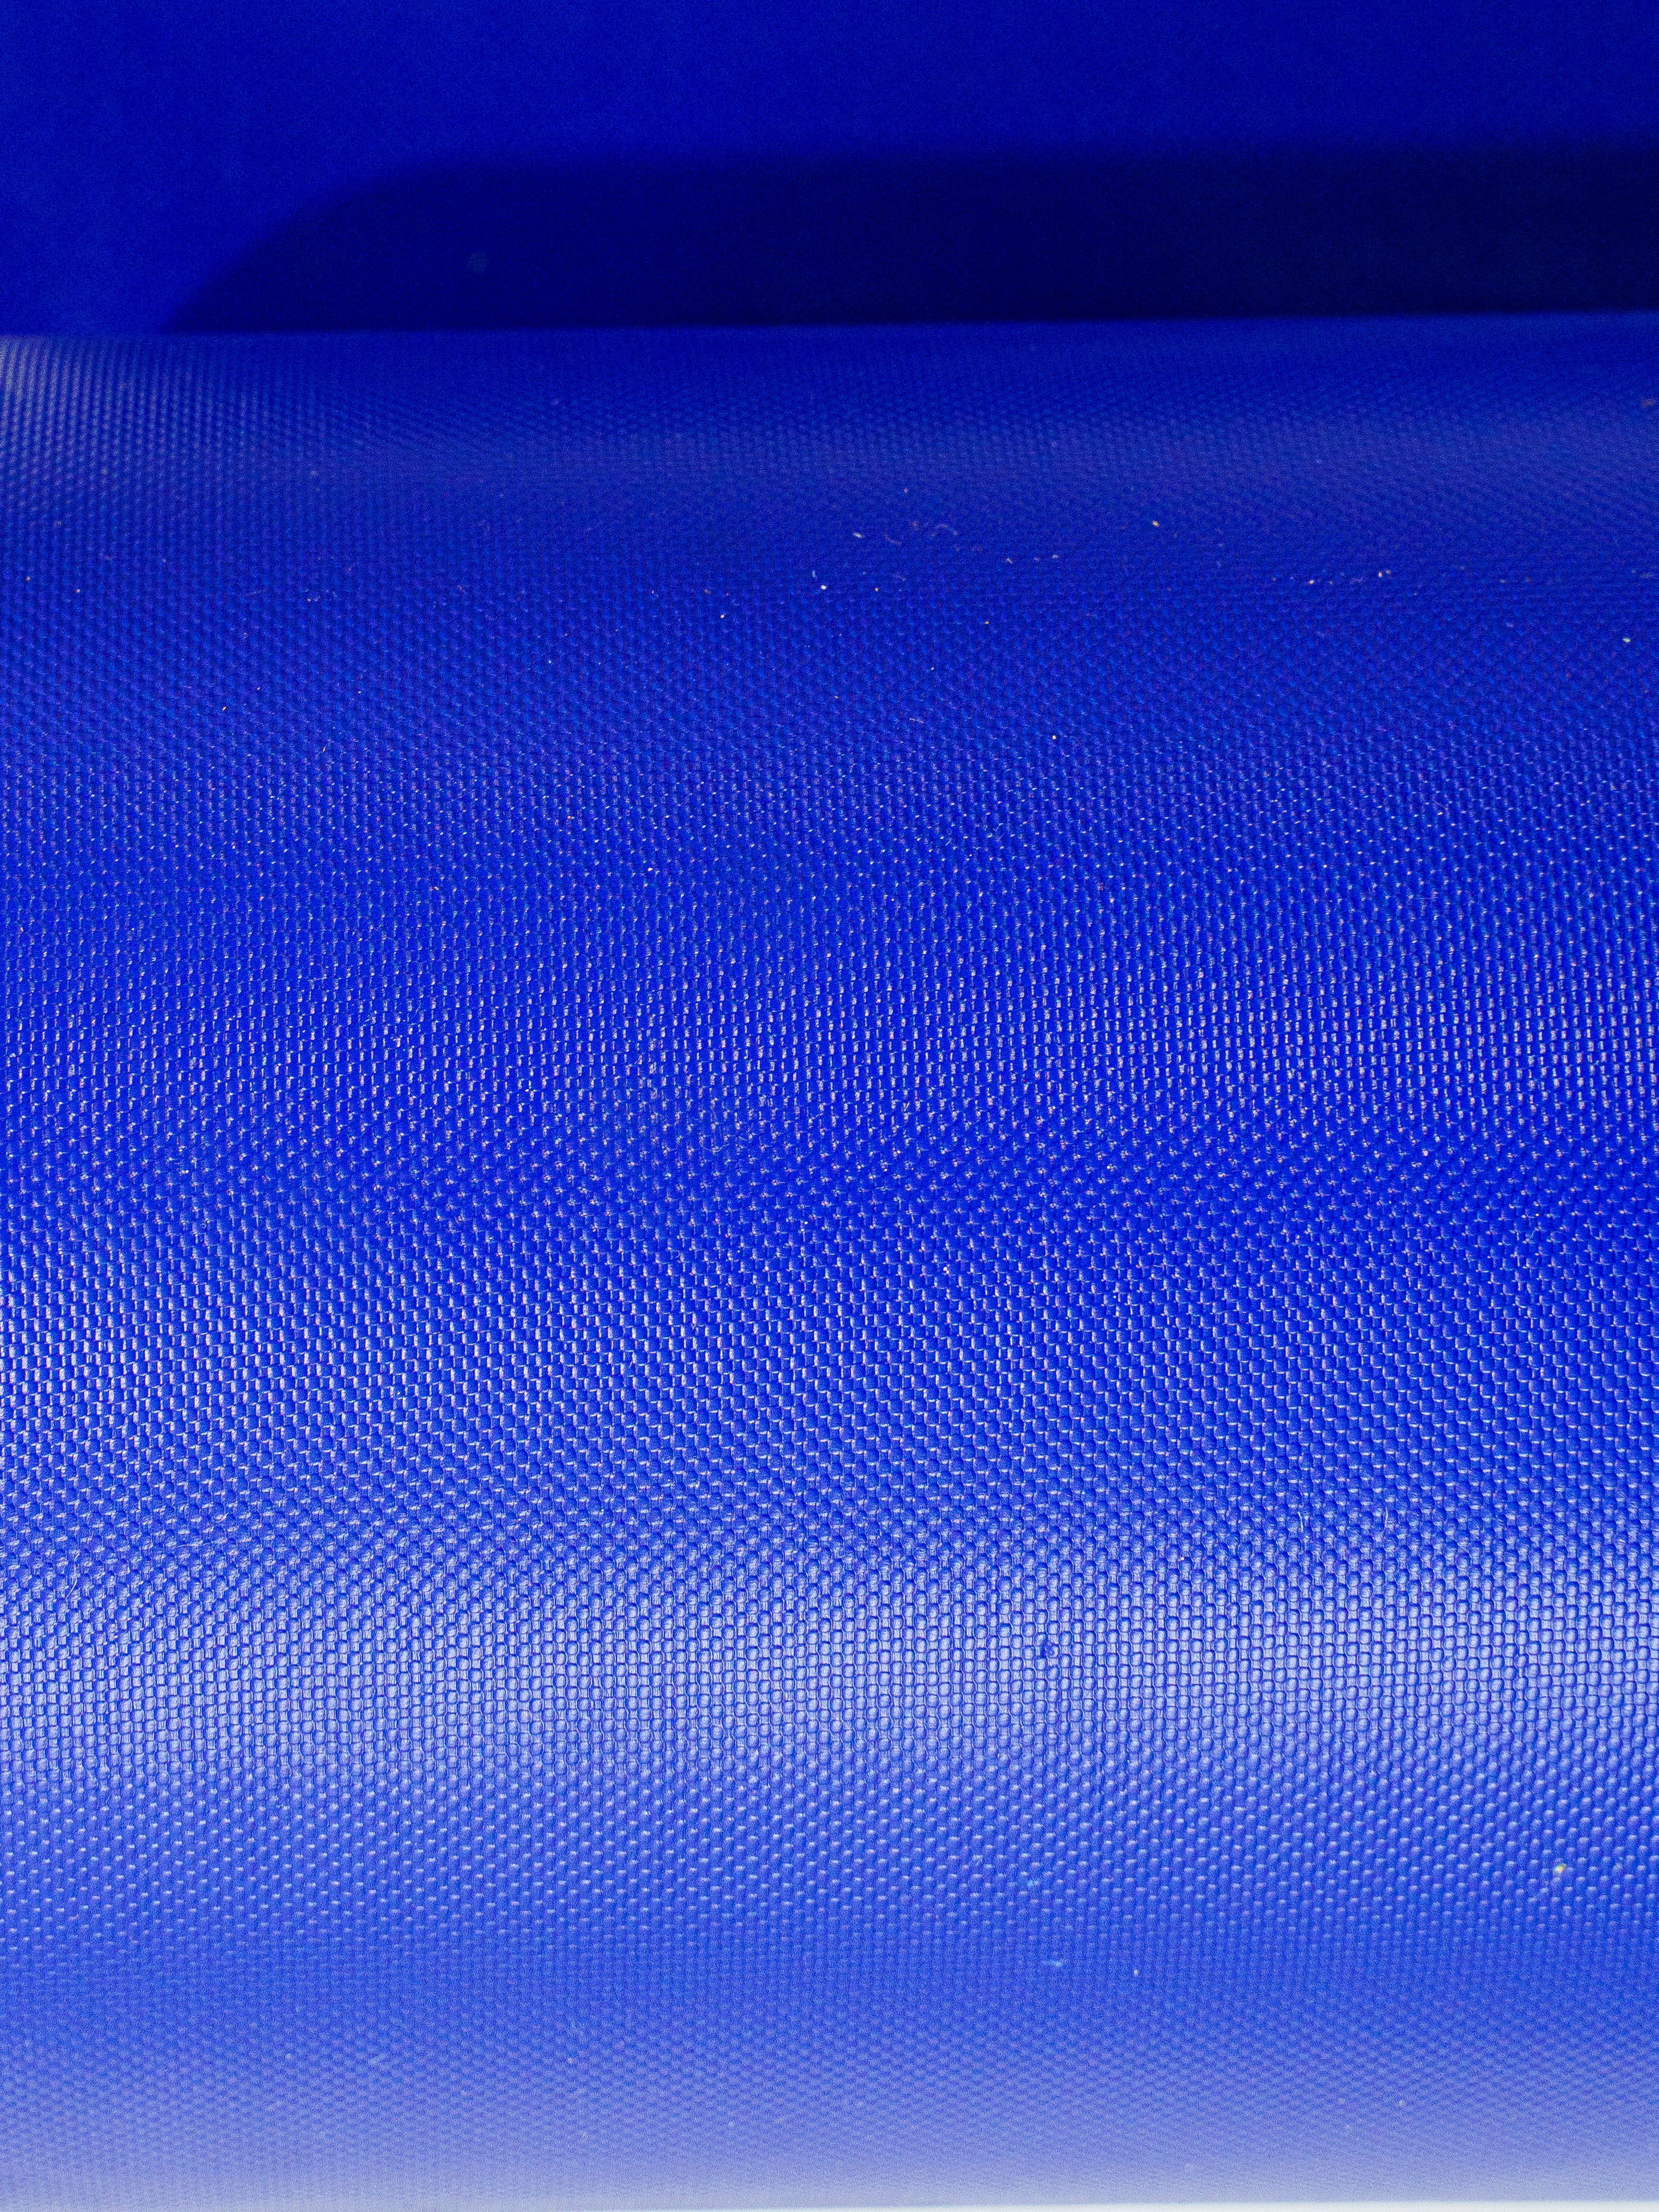 Пленка пвх голубой. Плёнка ПВХ тонированная синяя. Стеновой протектор стандарт 30мм ПВХ-ткань 630гр/м2 НПЭ 22кг/м3. Ткань ПВХ голубая -. Стеновой протектор стандарт 30мм ПВХ-ткань 630гр/м2 НПЭ 22кг/м3 цена.